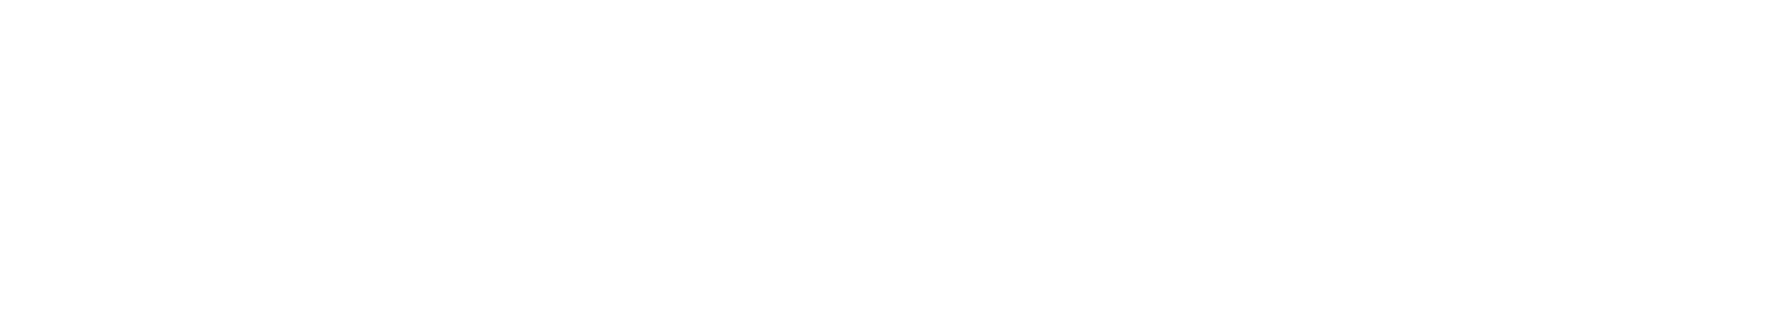 Family Hairsalon - Logo